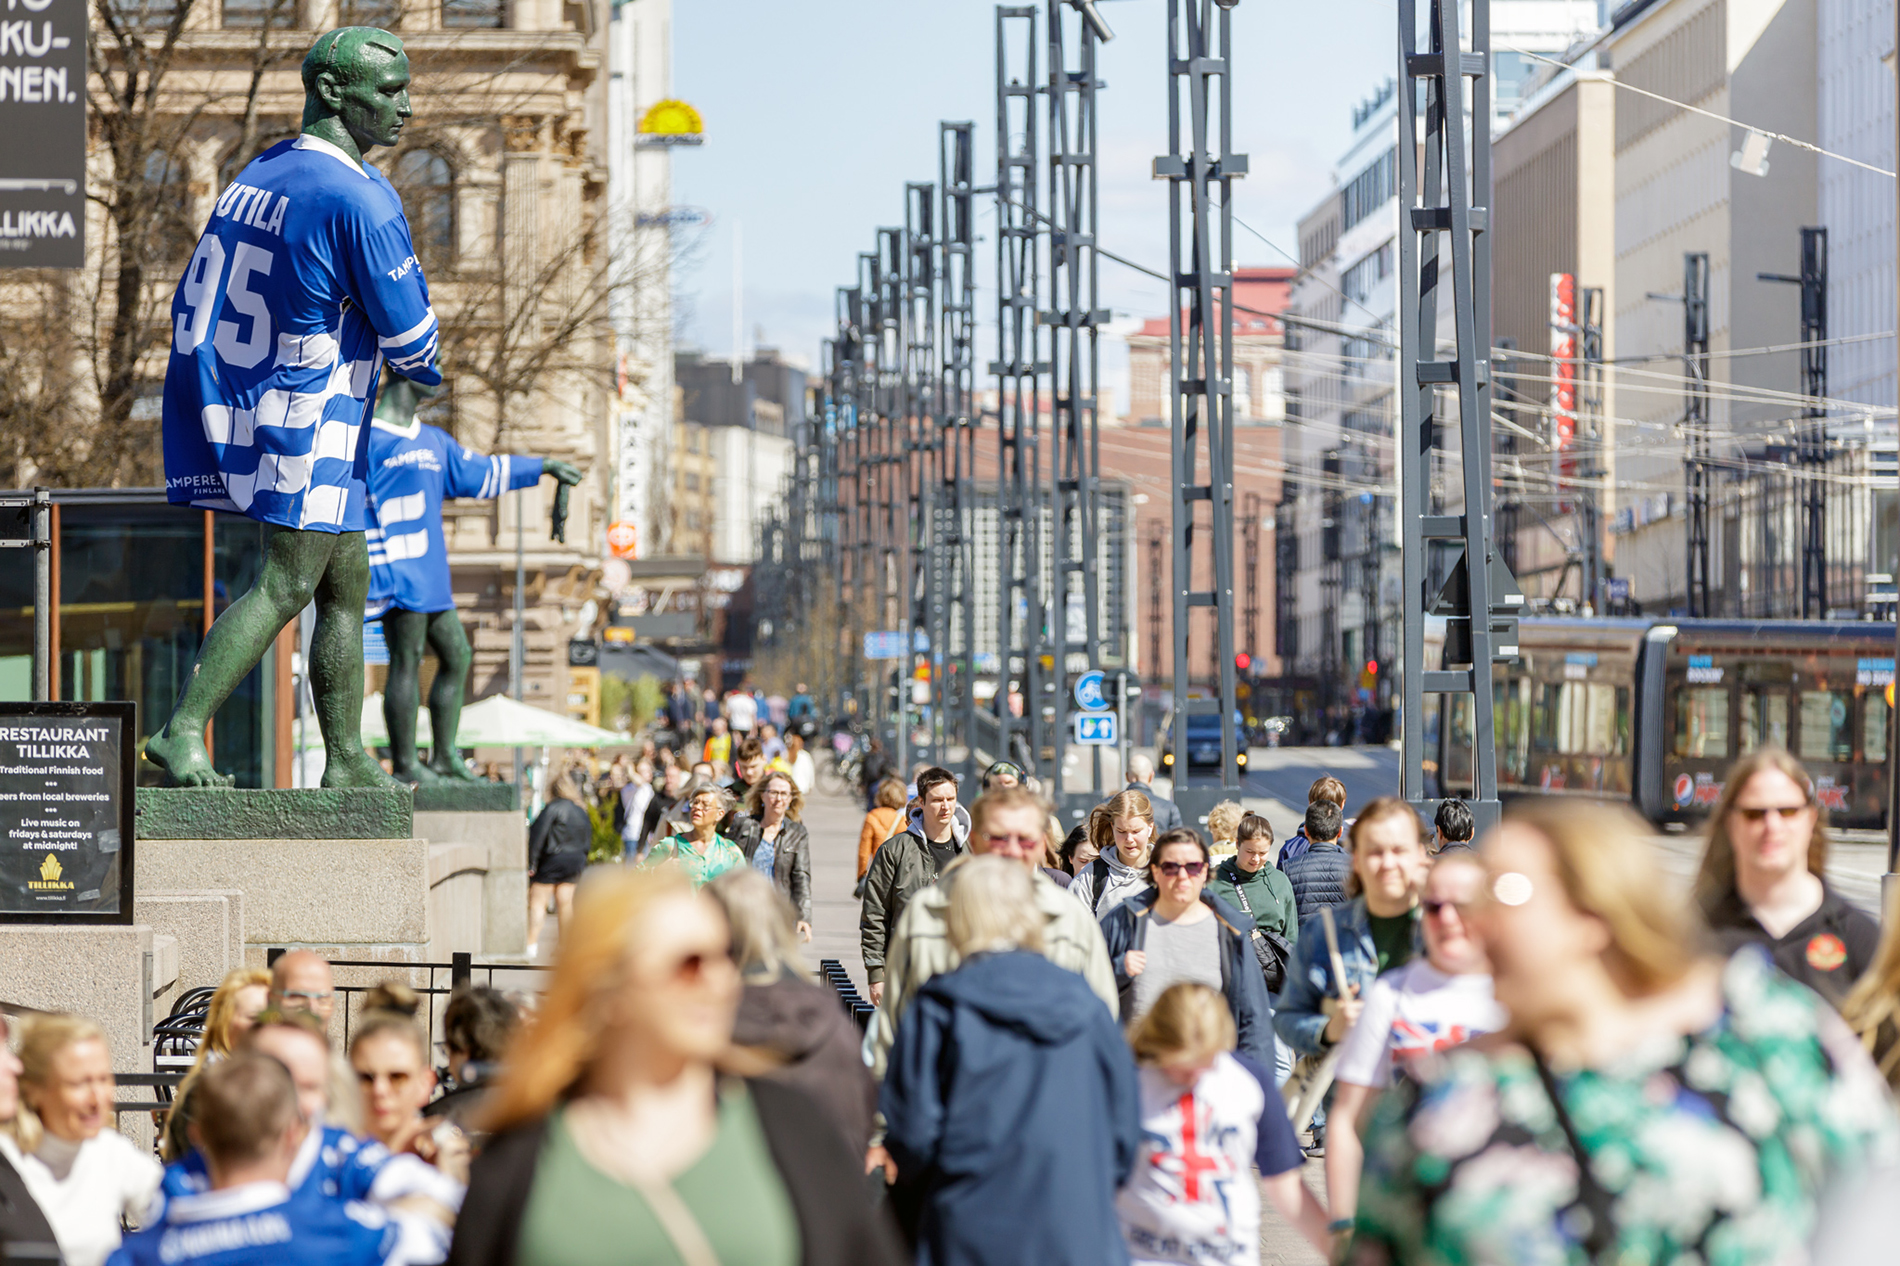 Hämeensilta bridge's statues wearing blue jerseys. People walking down the bridge.